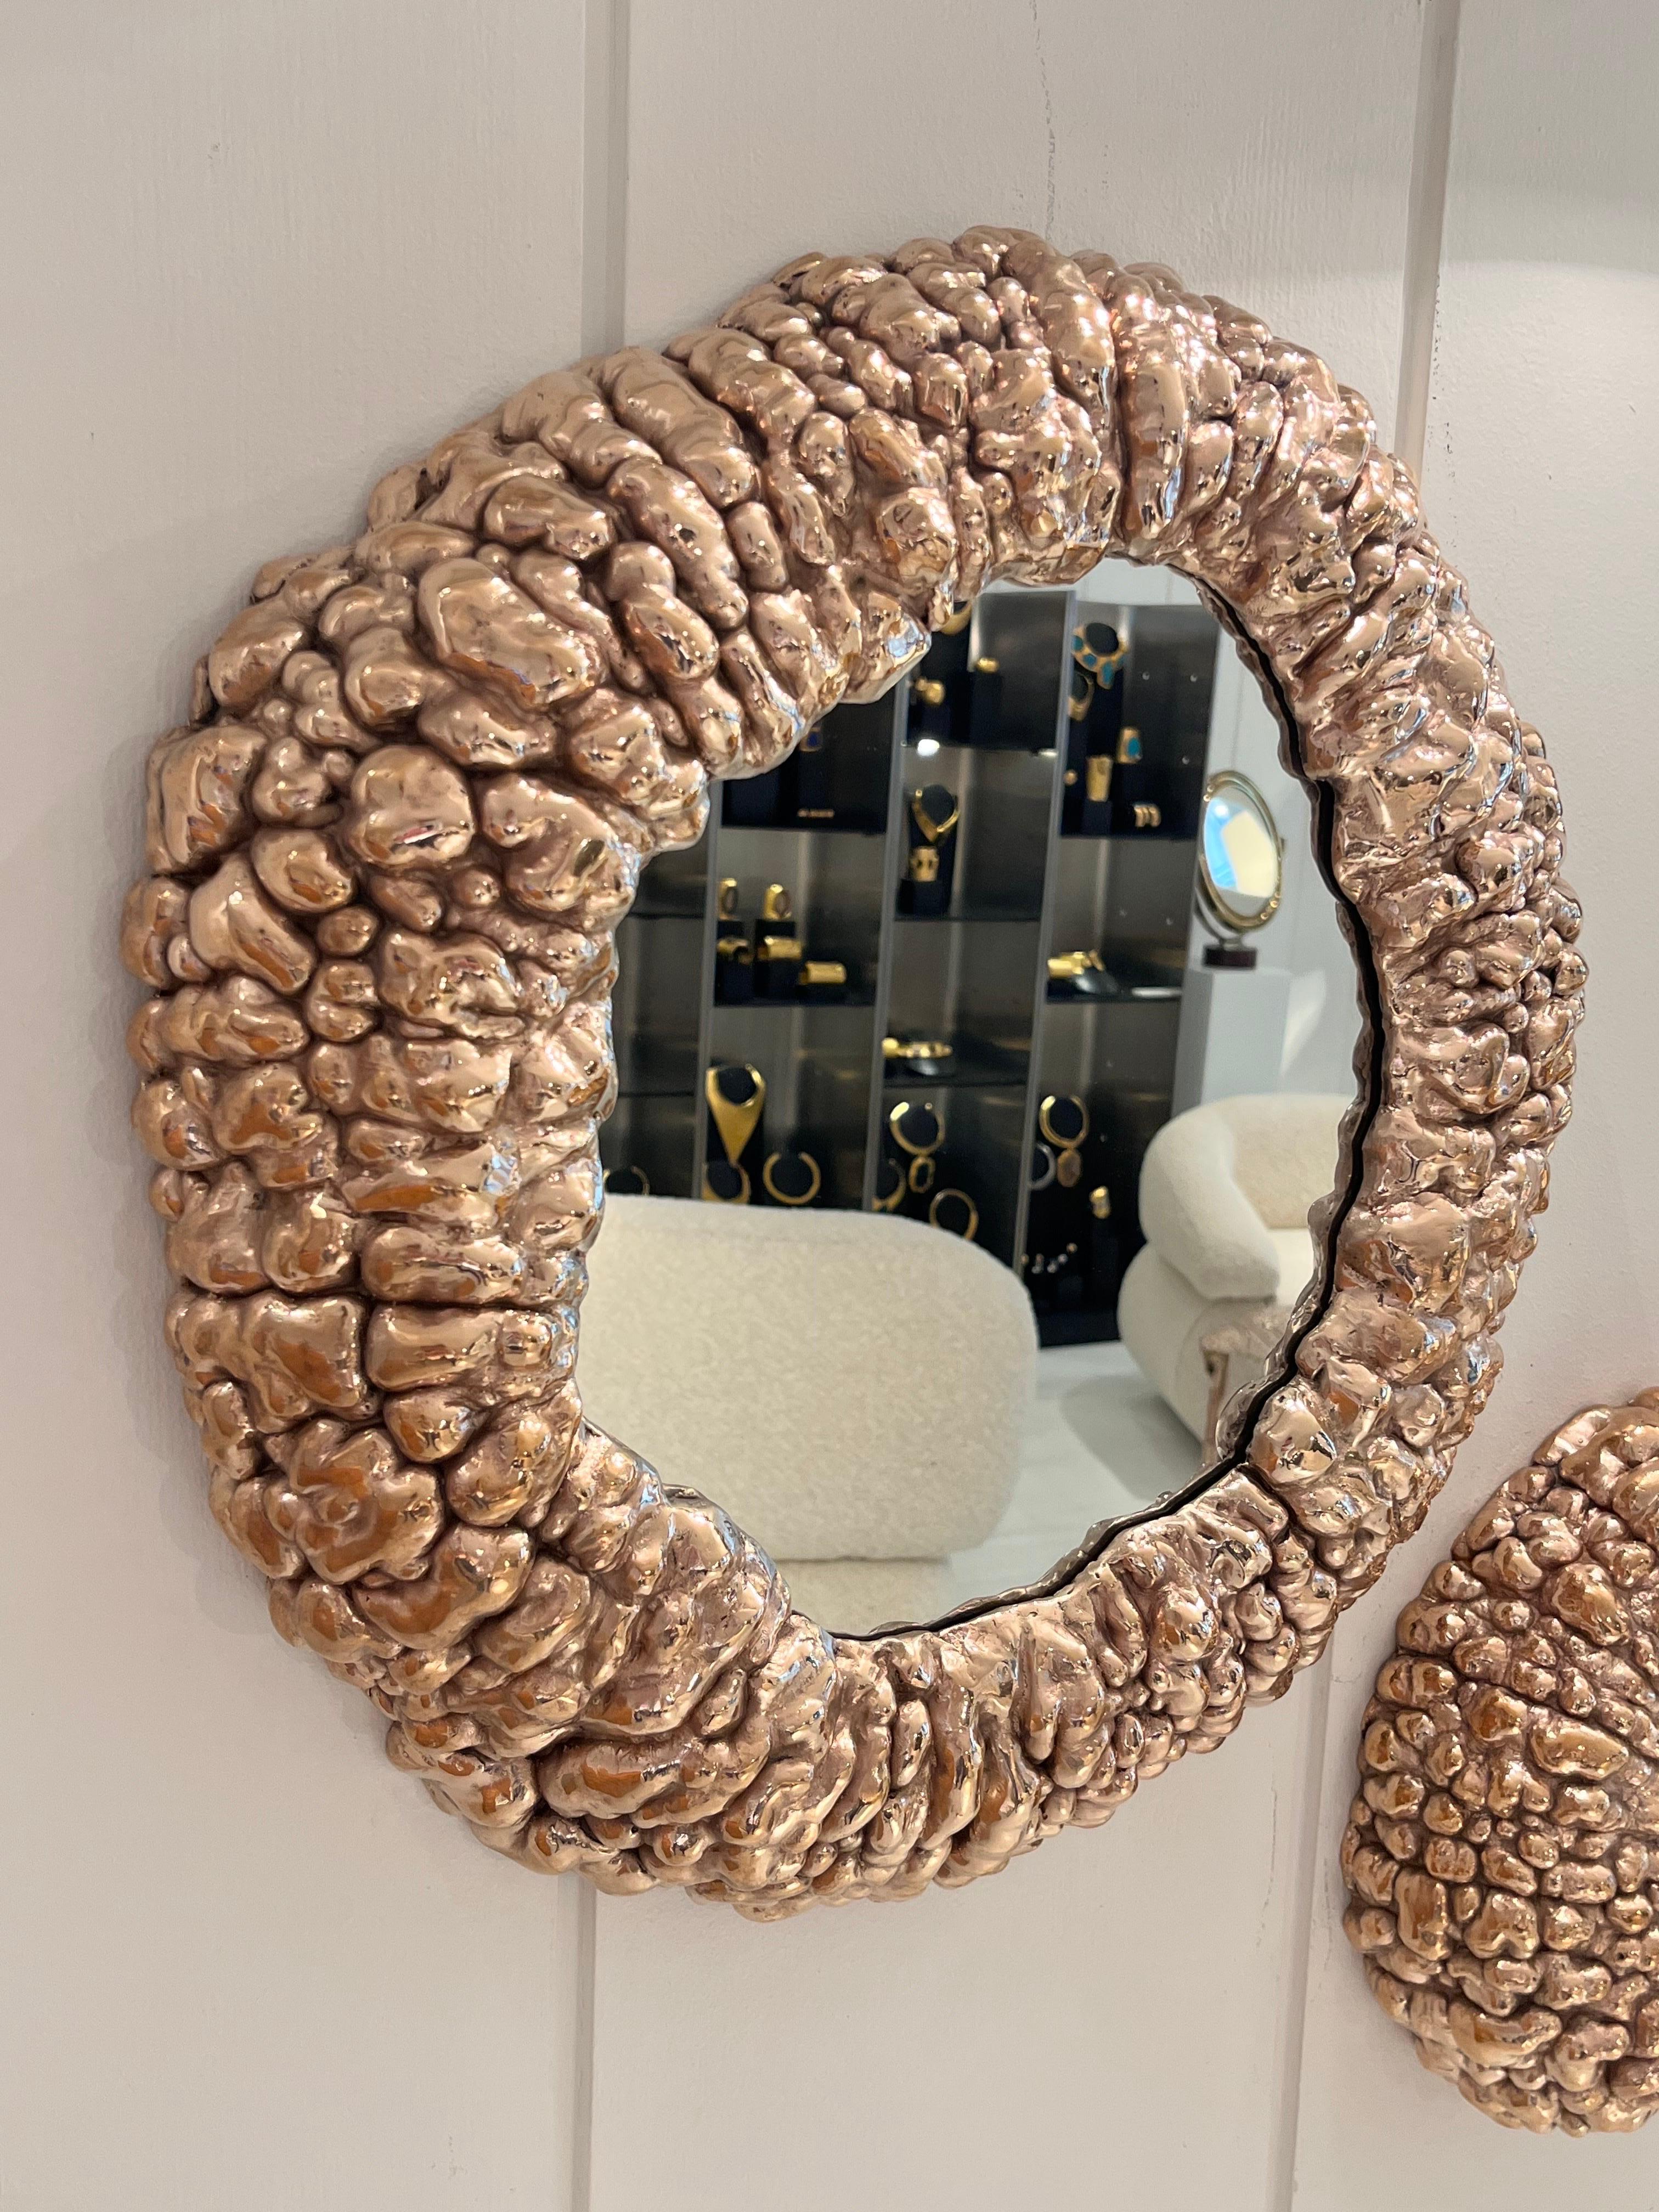 Clotilde Ancarani
Vergoldete Bronze-Spiegel
Großer Buble-Spiegel: 8 × 52 × 52 cm
Belgien